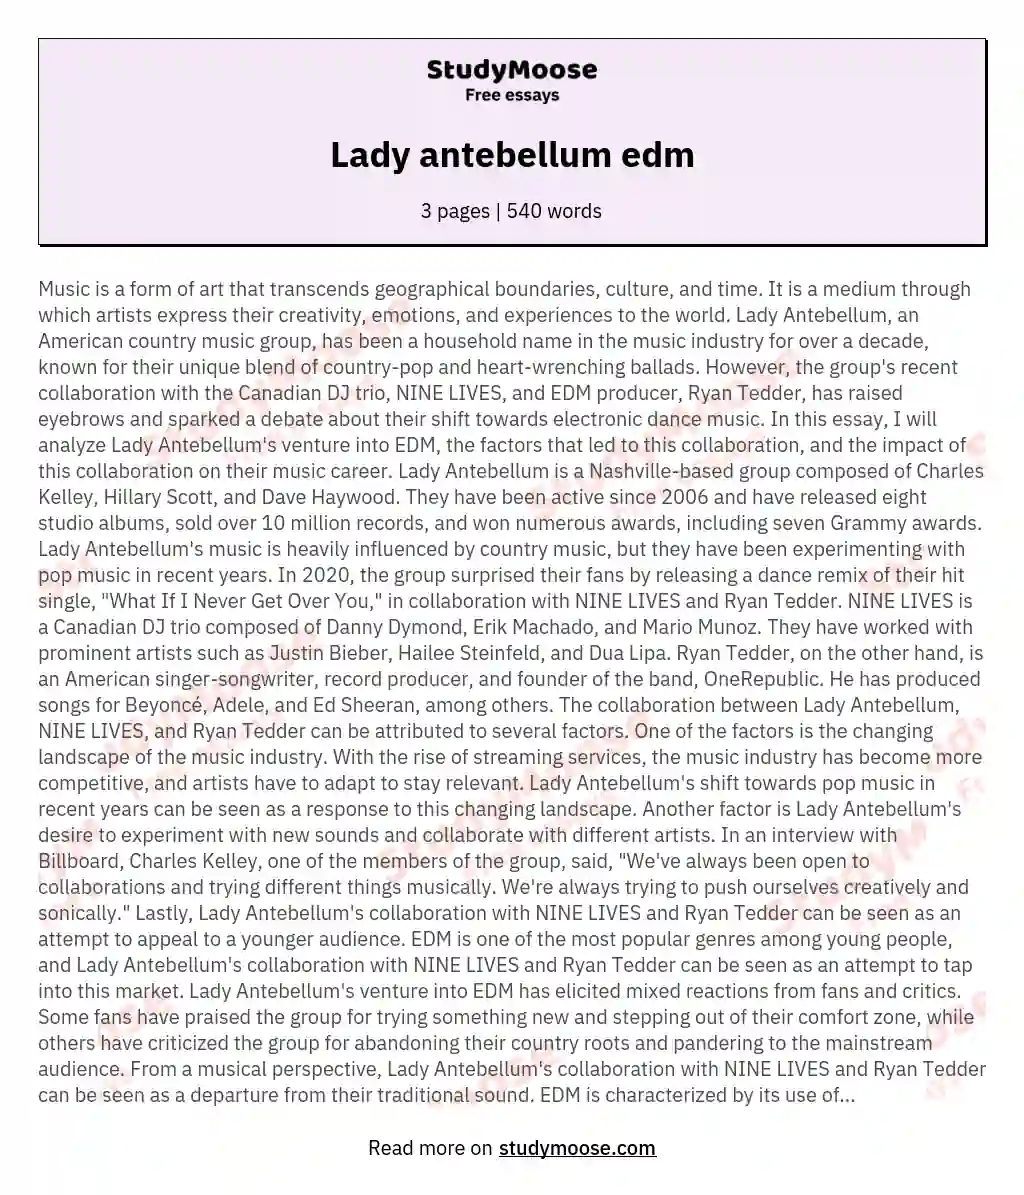 Lady antebellum edm essay